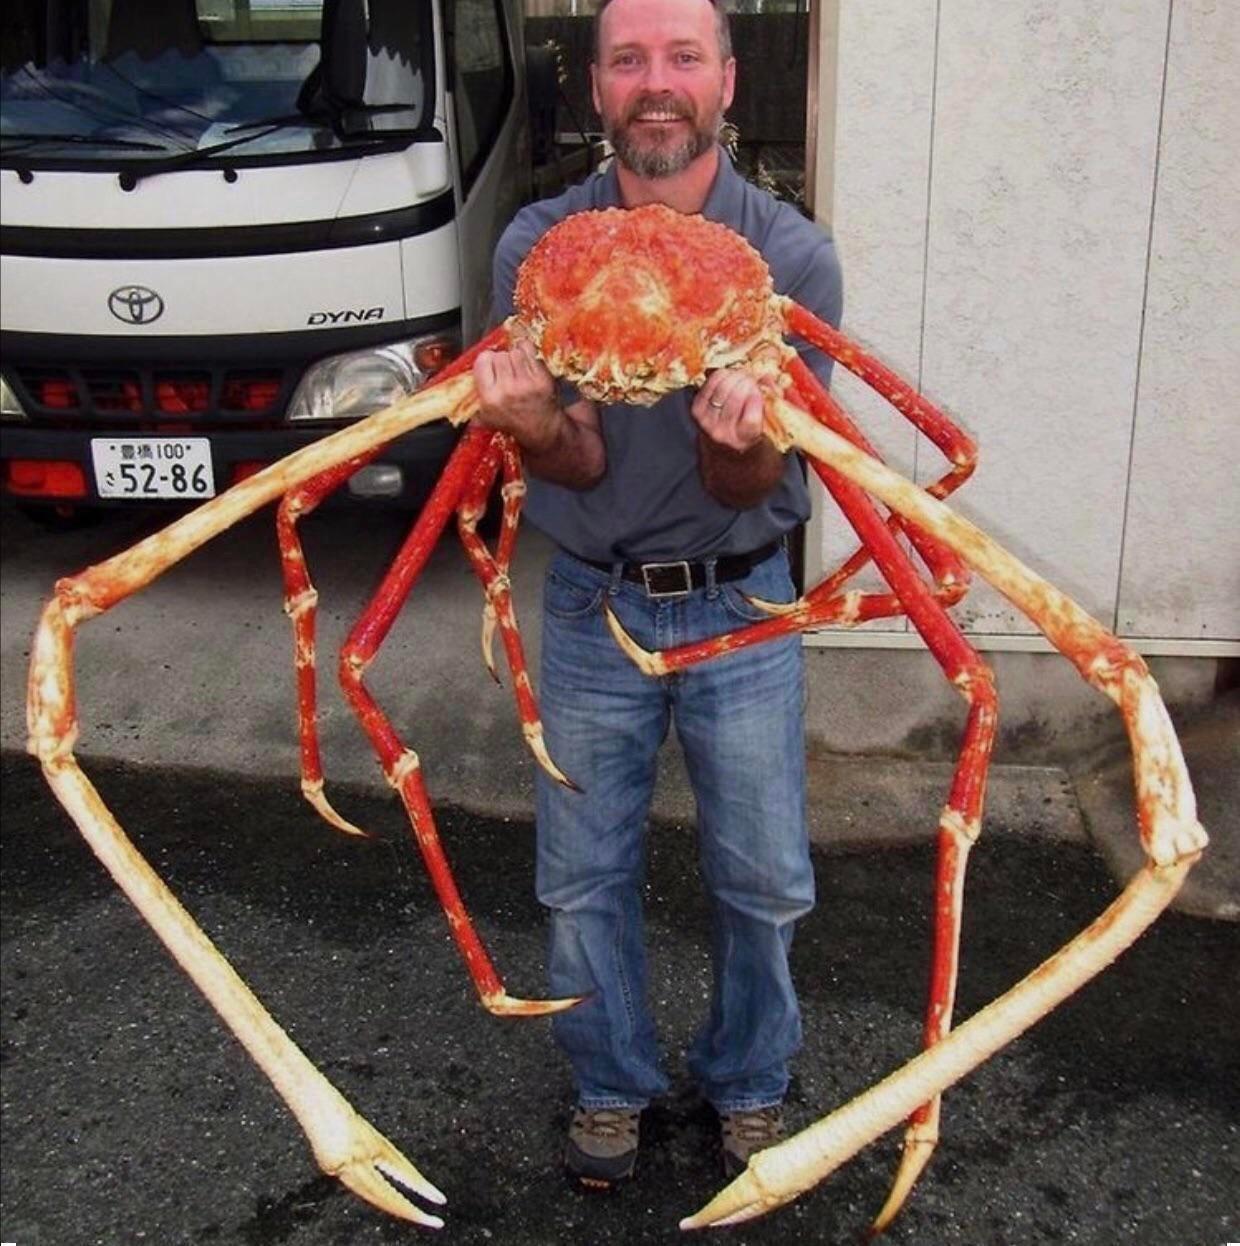 japanese spider crab - Dyna 100 5286